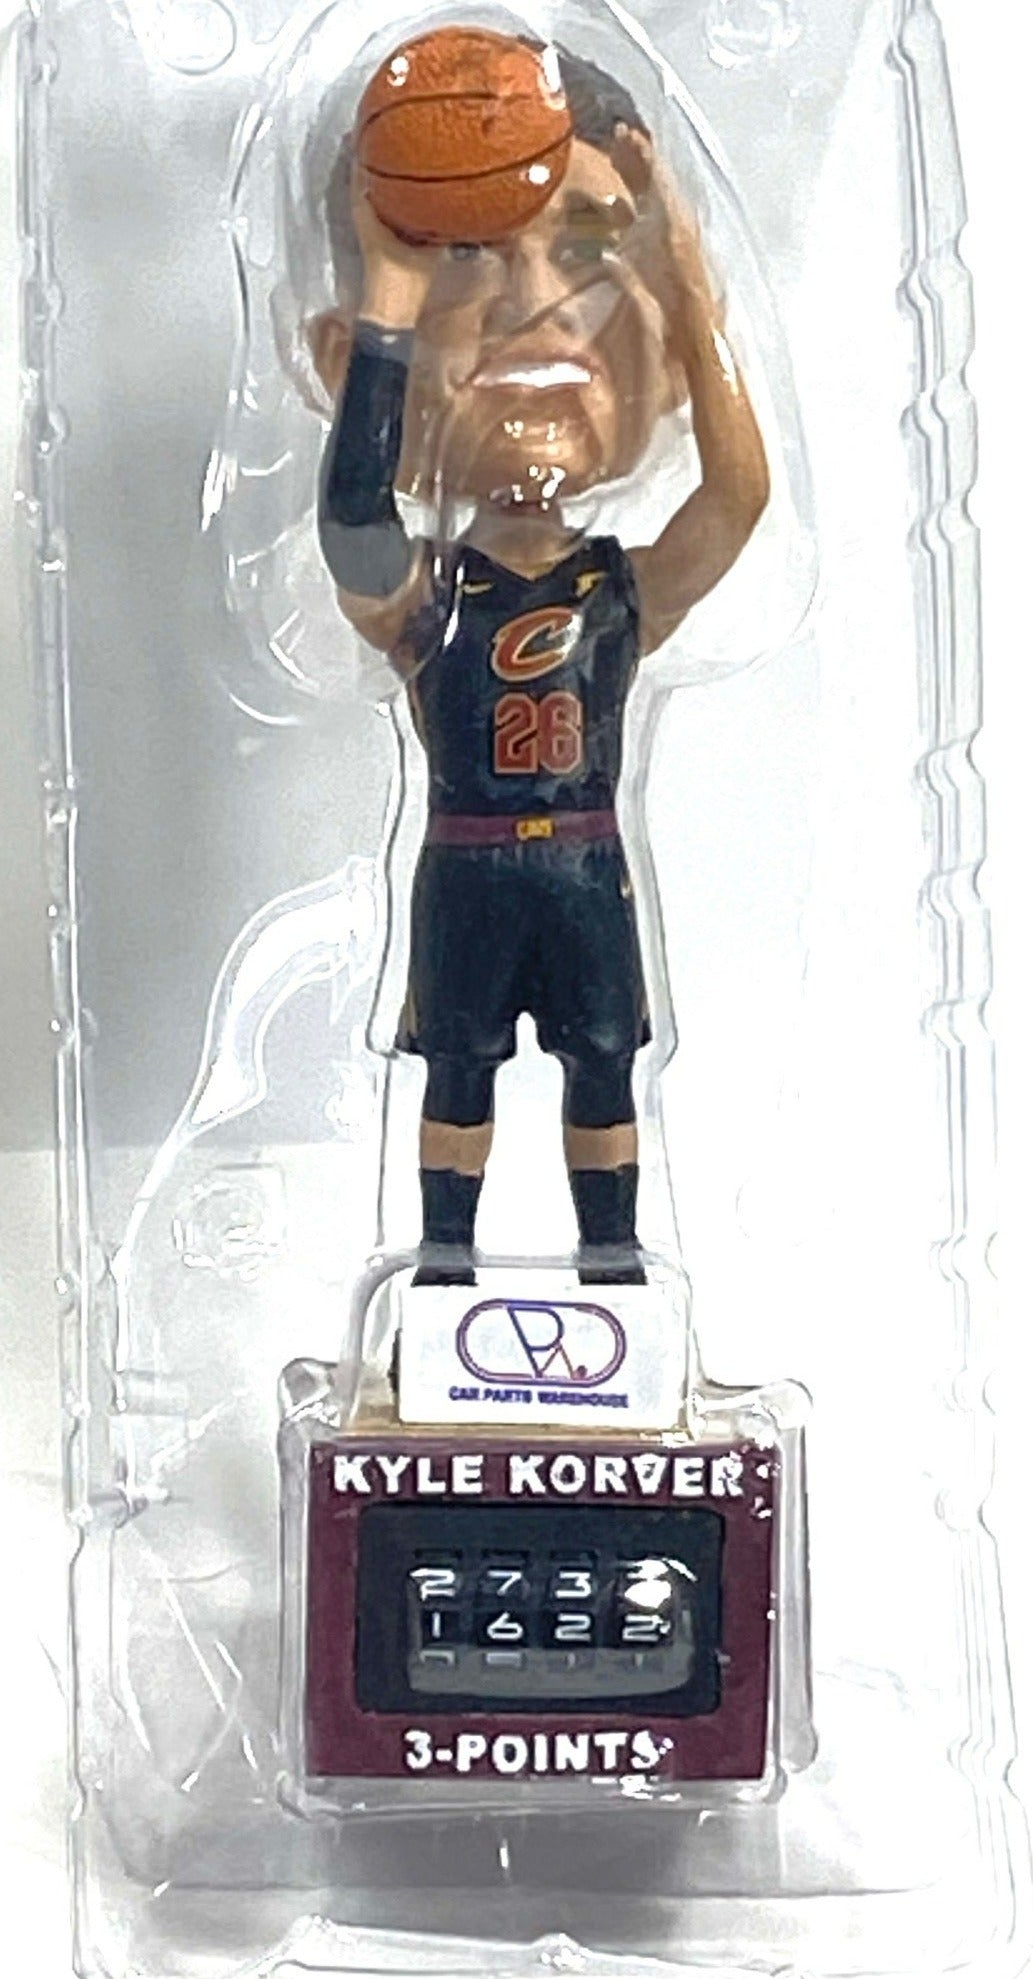 Kyle Korver 2018 NBA Cleveland Cavaliers "Korver Kounter" Bobblehead (Used) by Cleveland Cavaliers